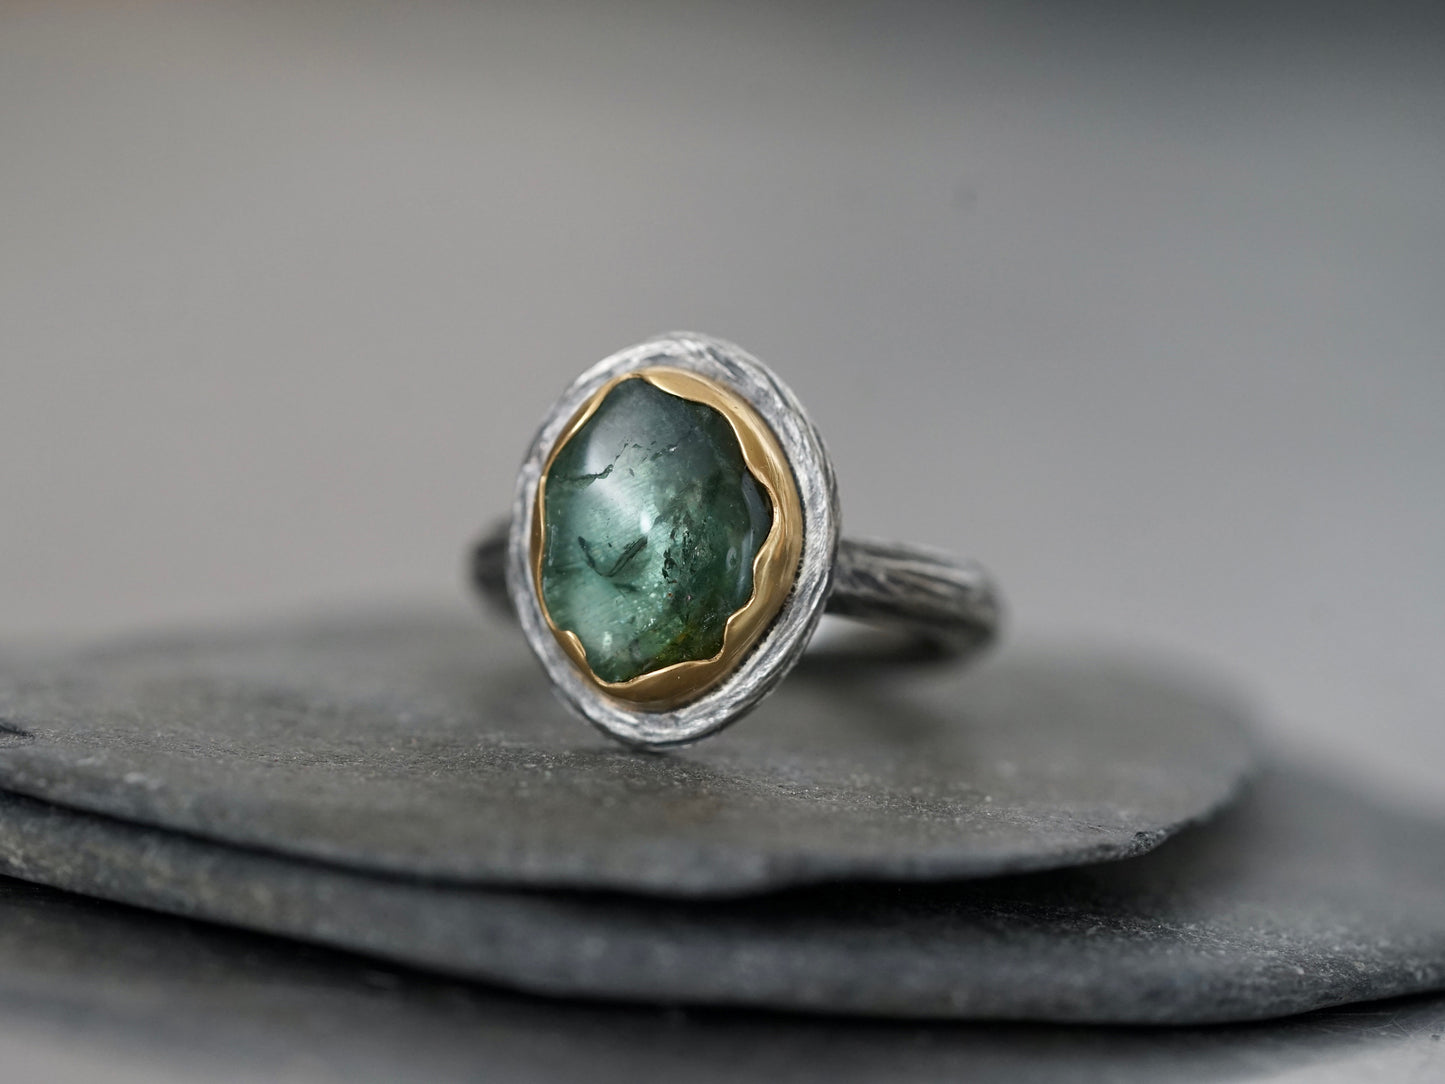 Green tourmaline ring, size 6.5